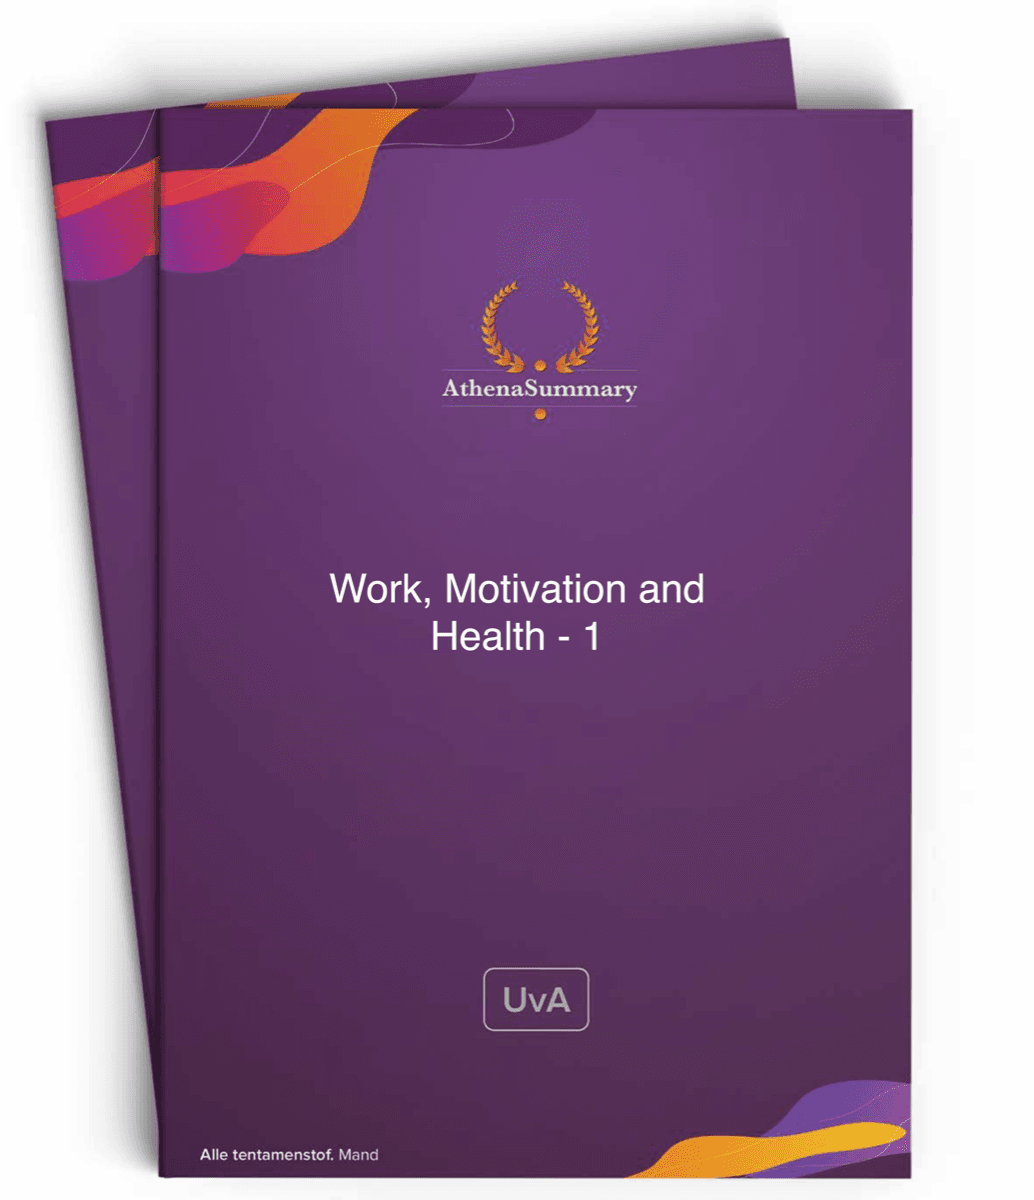 Literature Summary: Work, Motivation and Health - 1